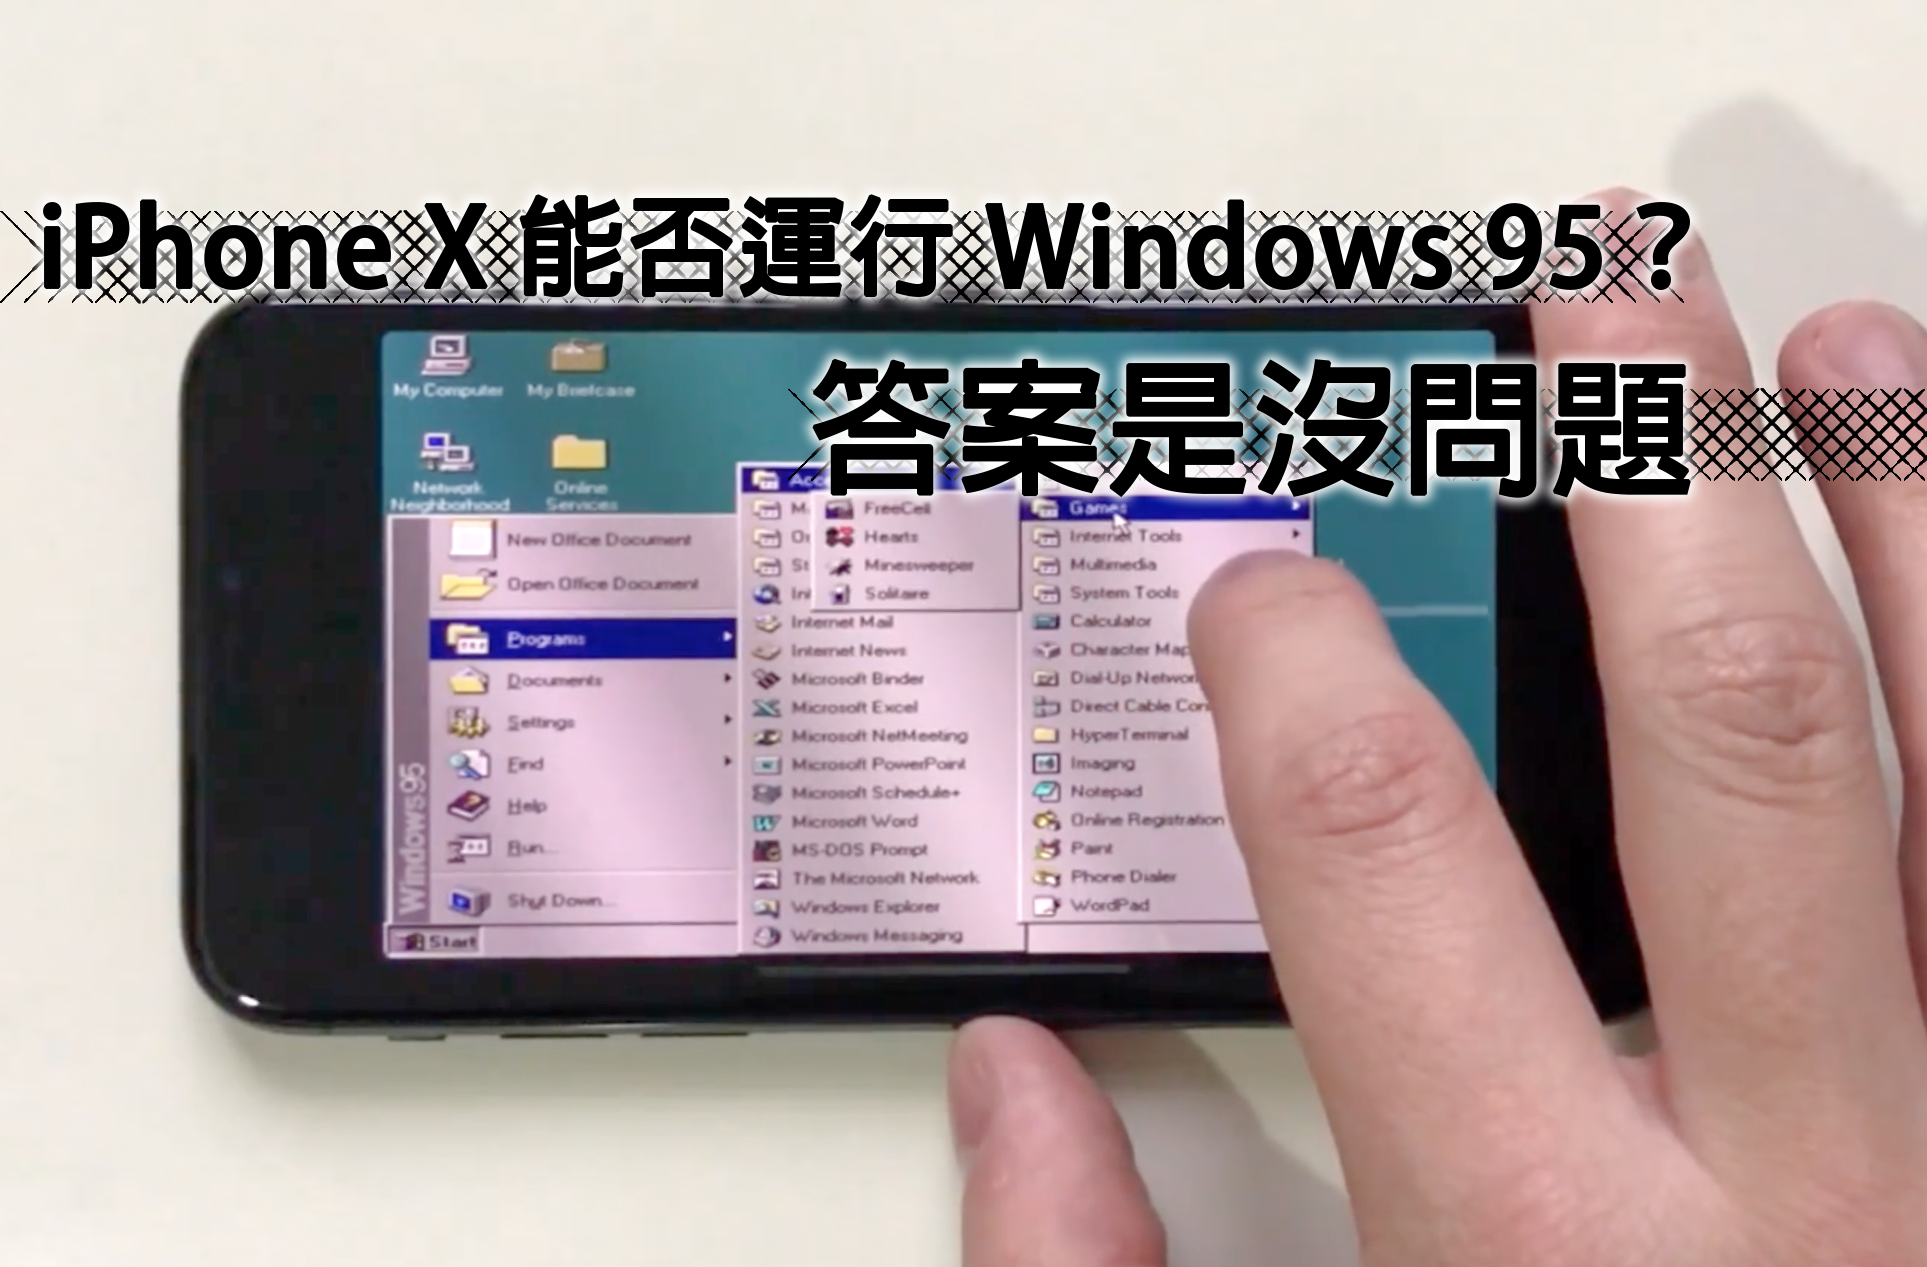 iPhone X Windows 95 Title